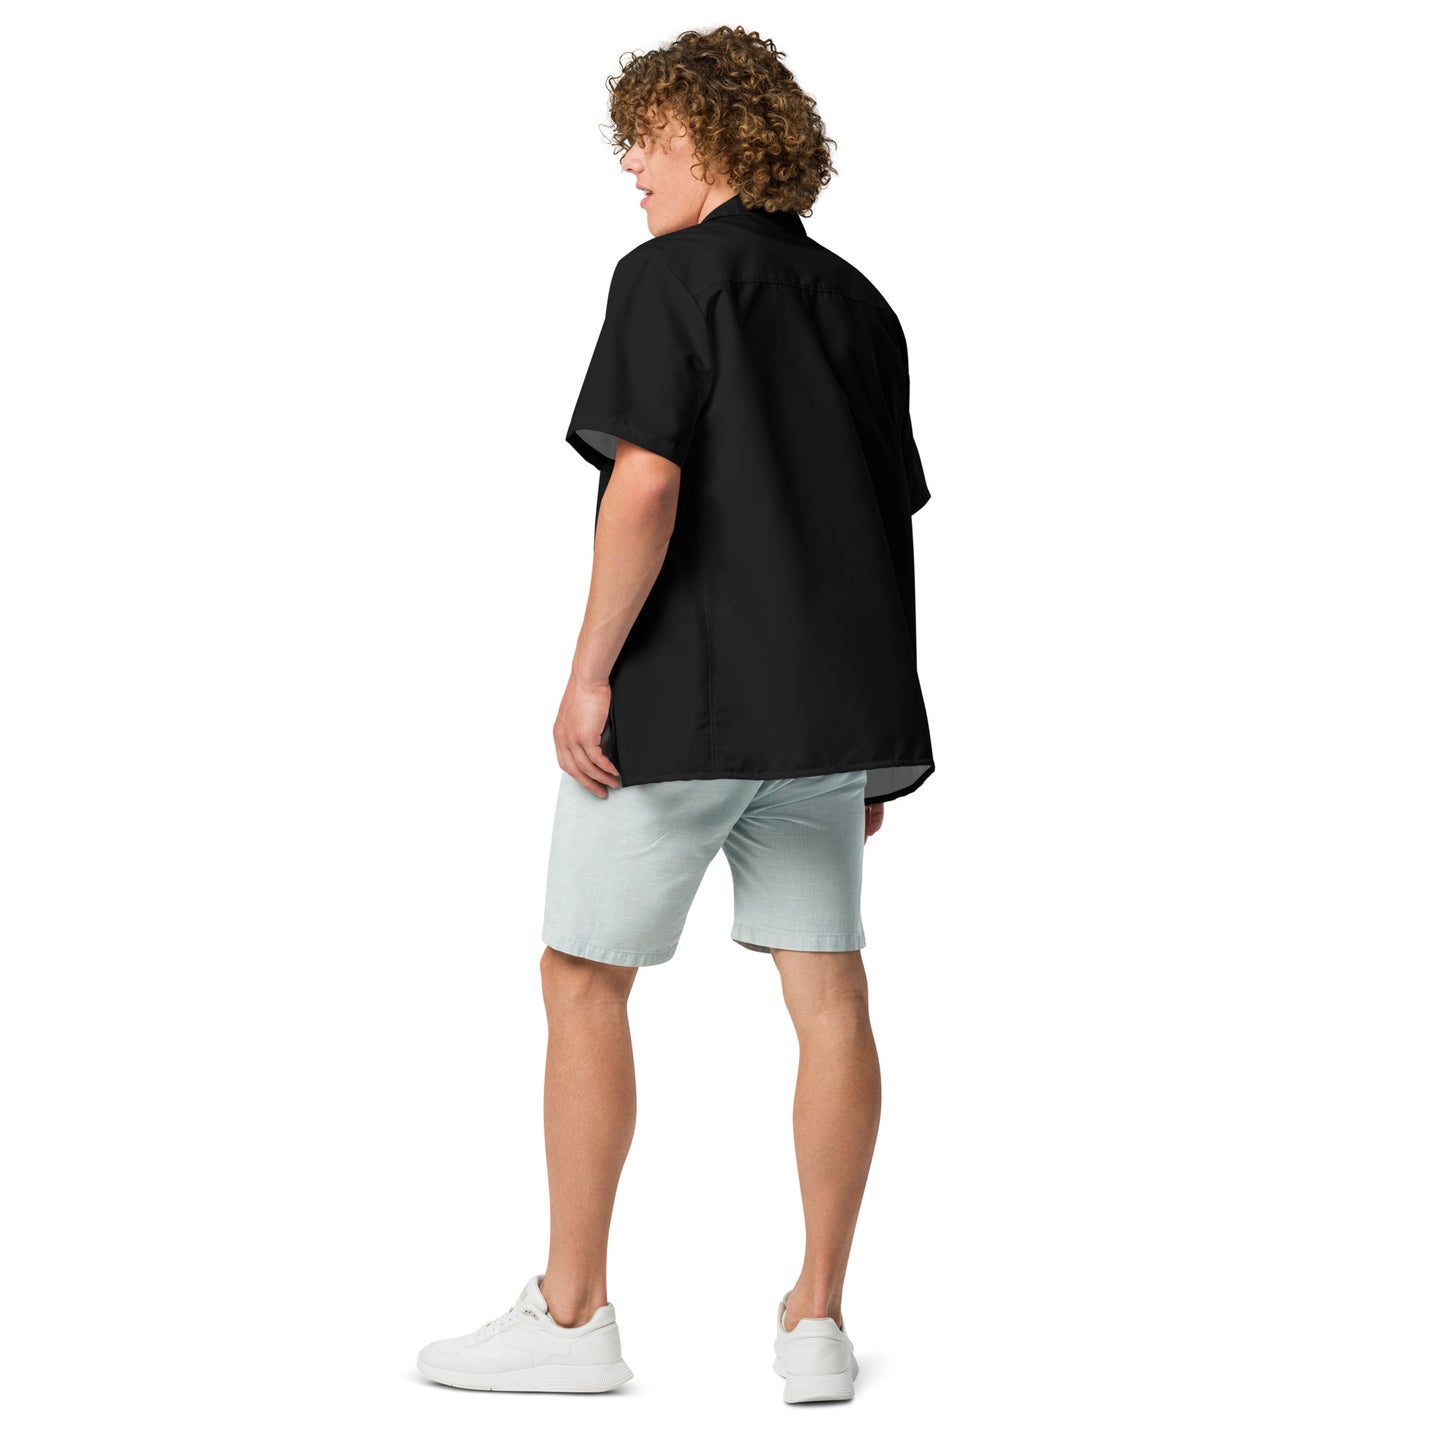 Humble Sportswear, men's Color Match black lightweight casual button shirt 